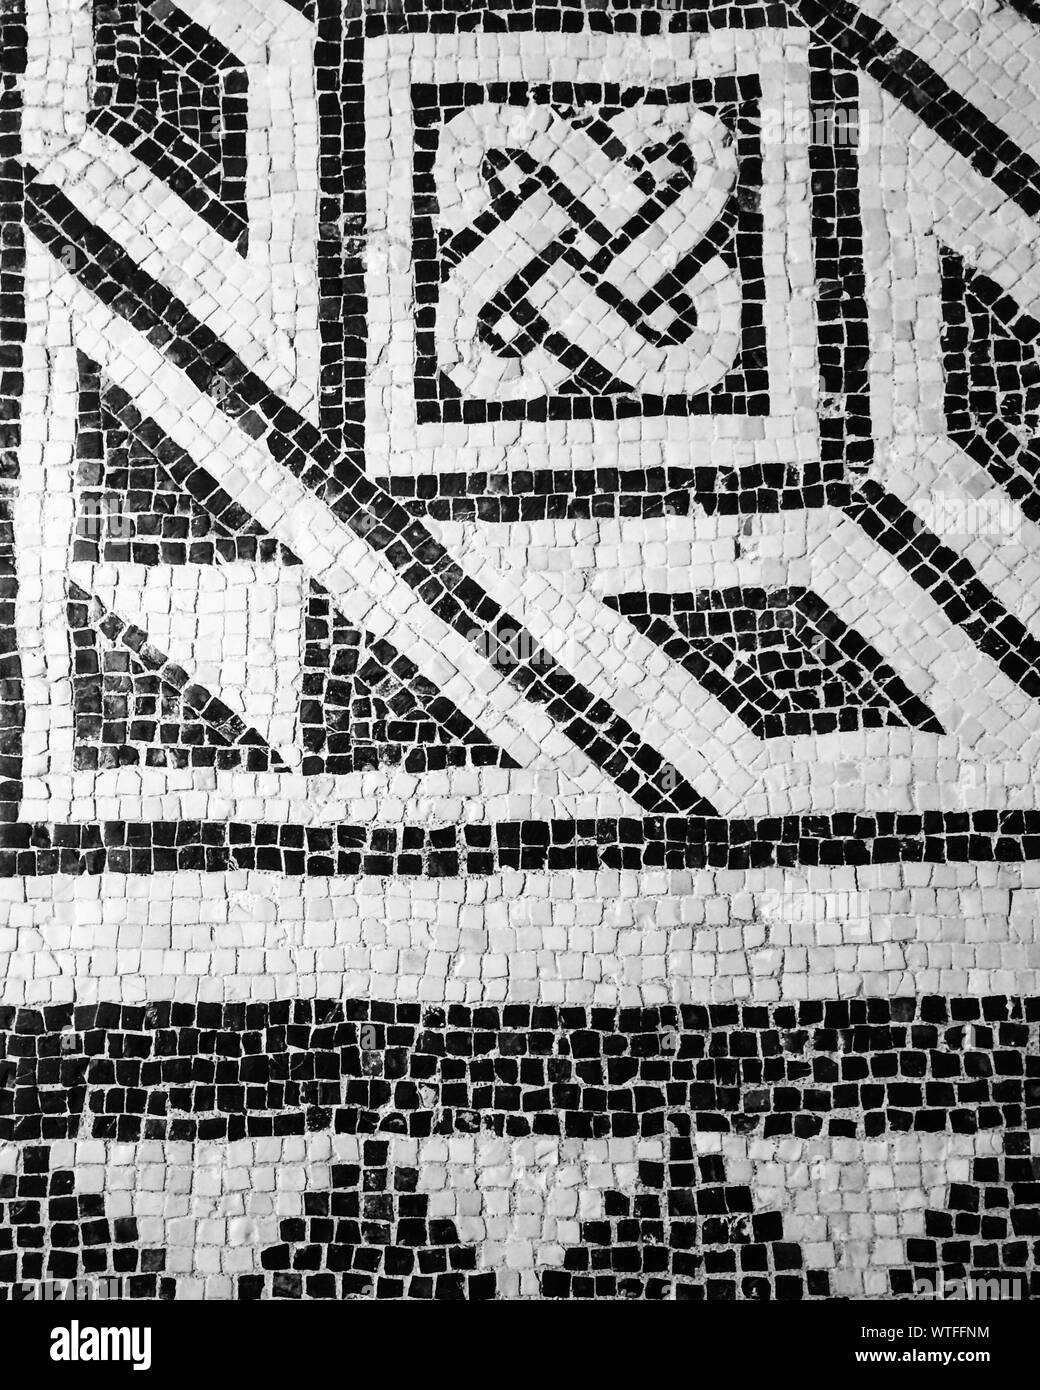 Mosaic tiles ceramics Black and White Stock Photos & Images - Alamy